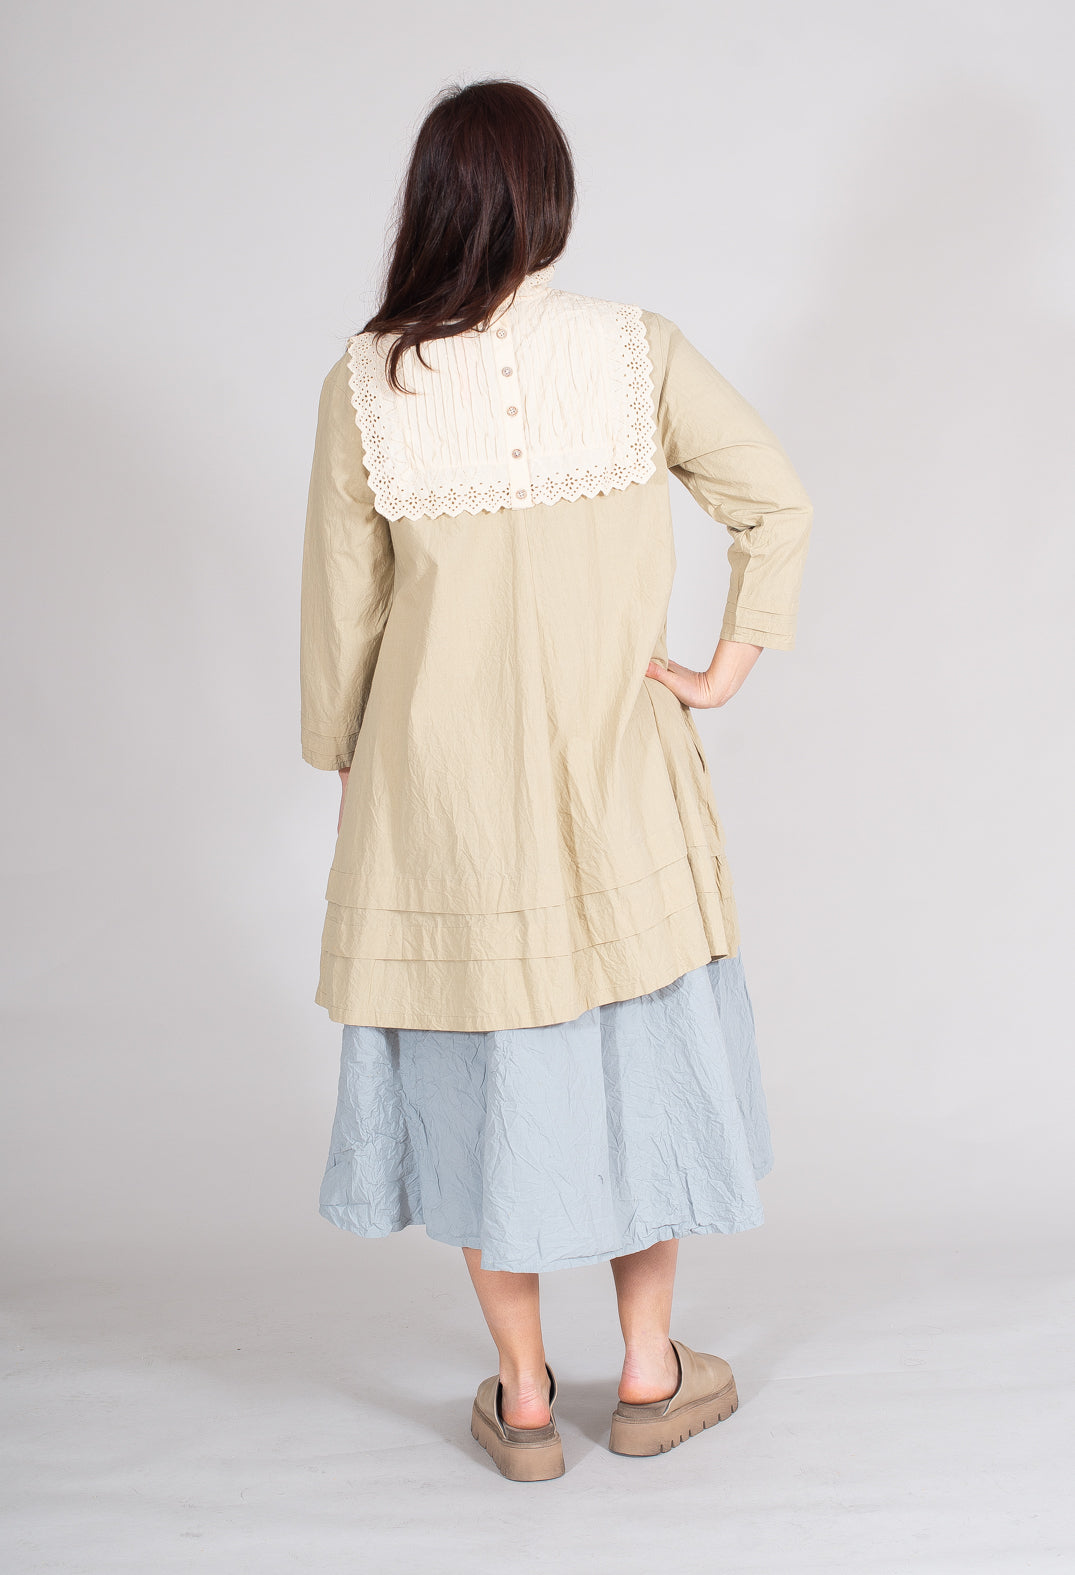 Cotton Tunic Dress in Khaki with Detachable Bib